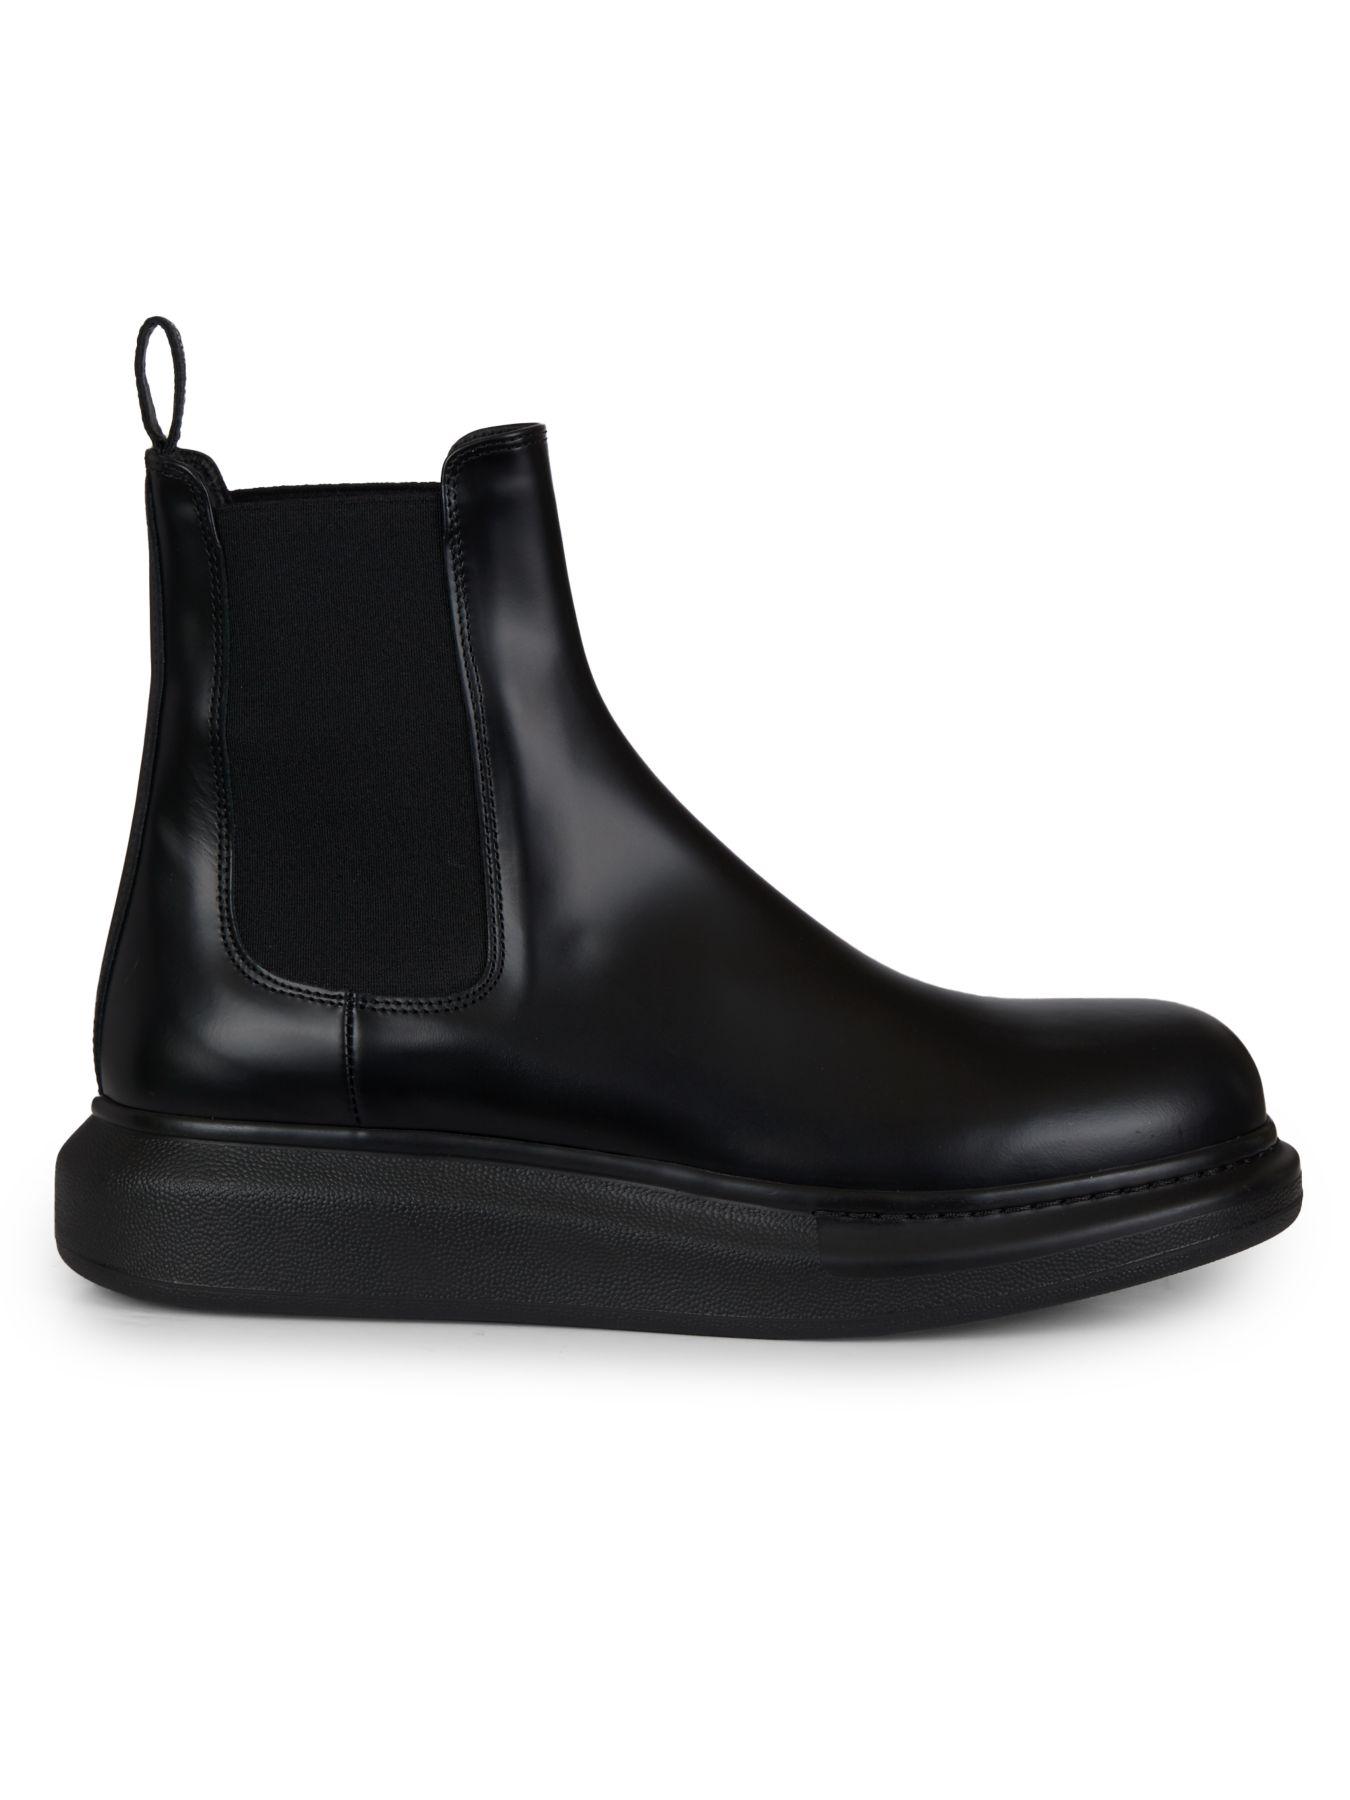 Alexander McQueen Platform Leather Chelsea Boots in Black for Men - Lyst